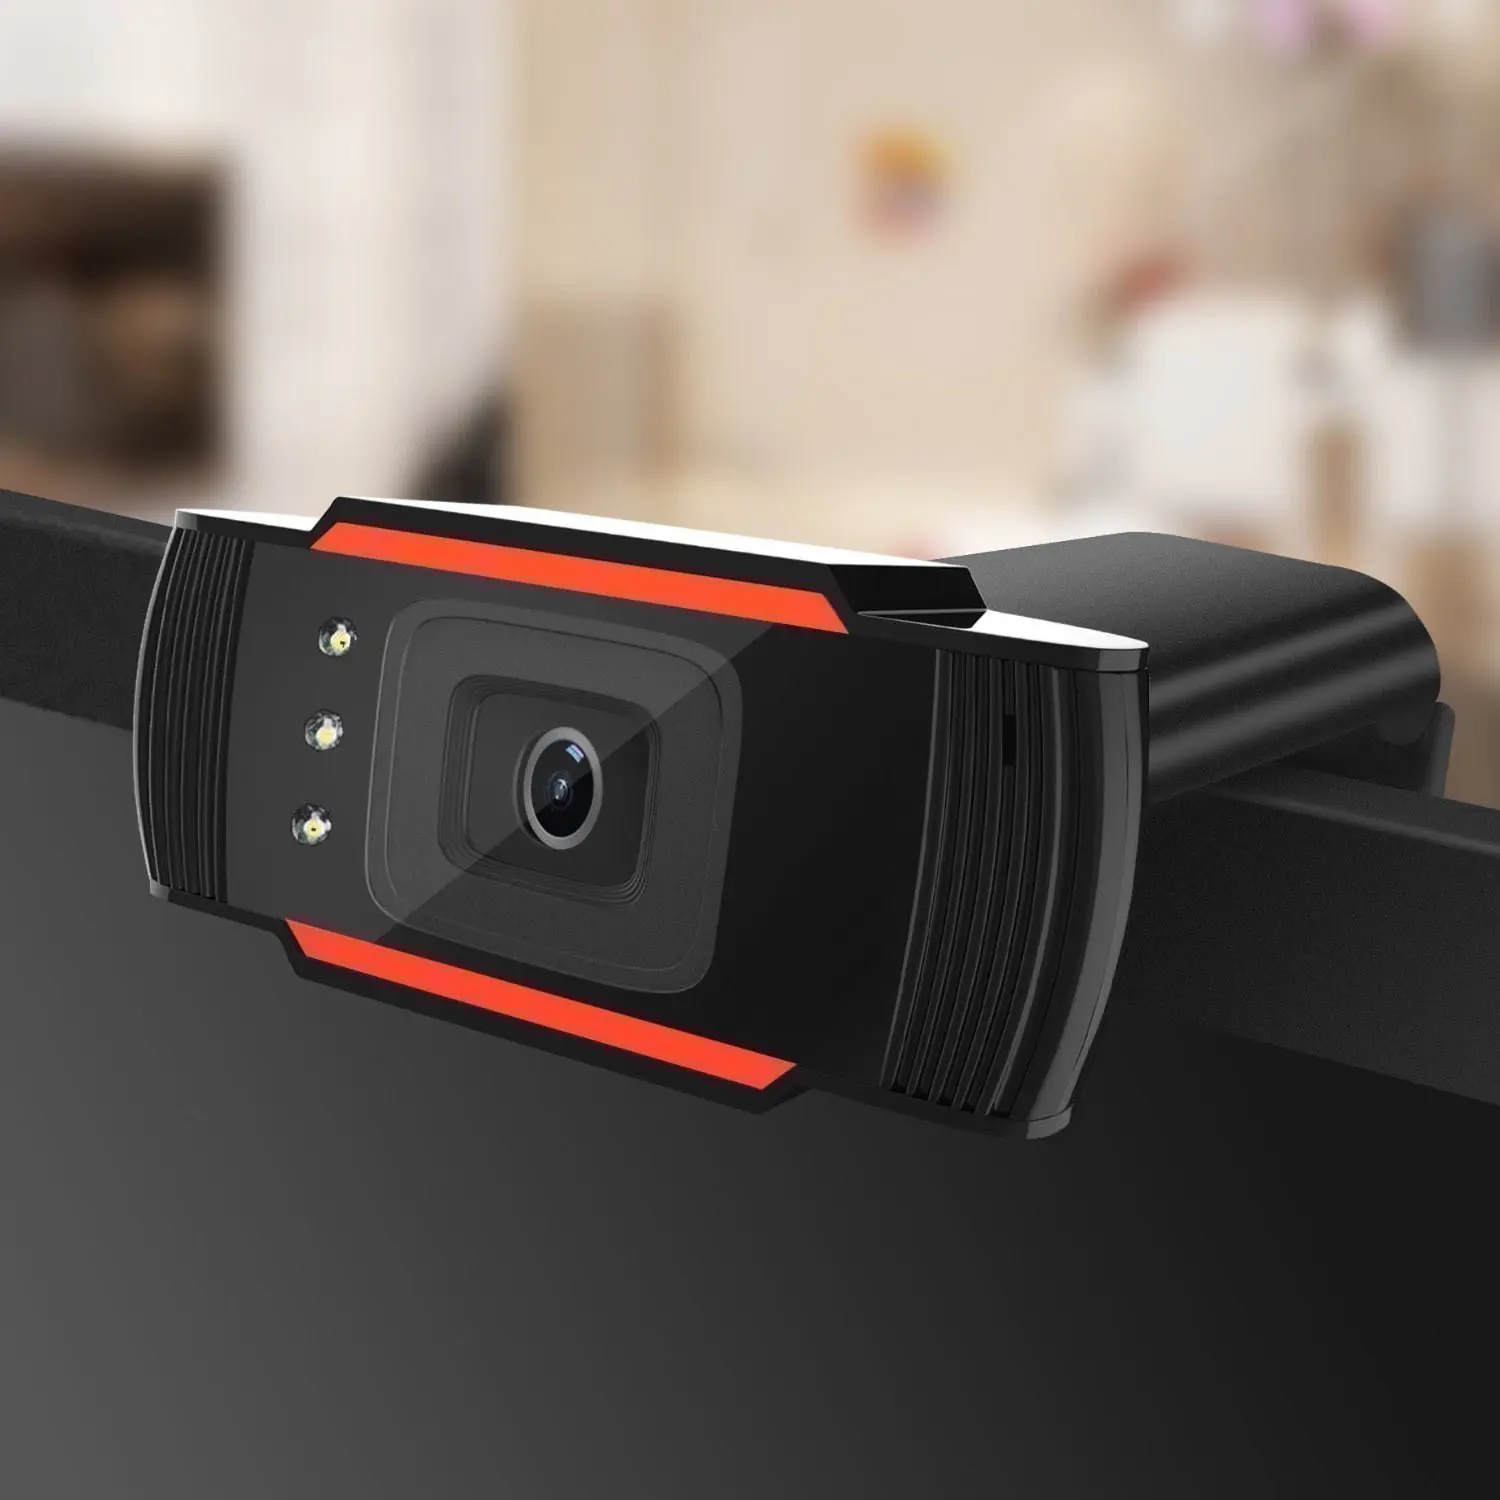 Fabriek Oem Speciale Prijs Hd Web Camera Webcam 1080P Hd Met Ingebouwde Microfoon Voor Latop